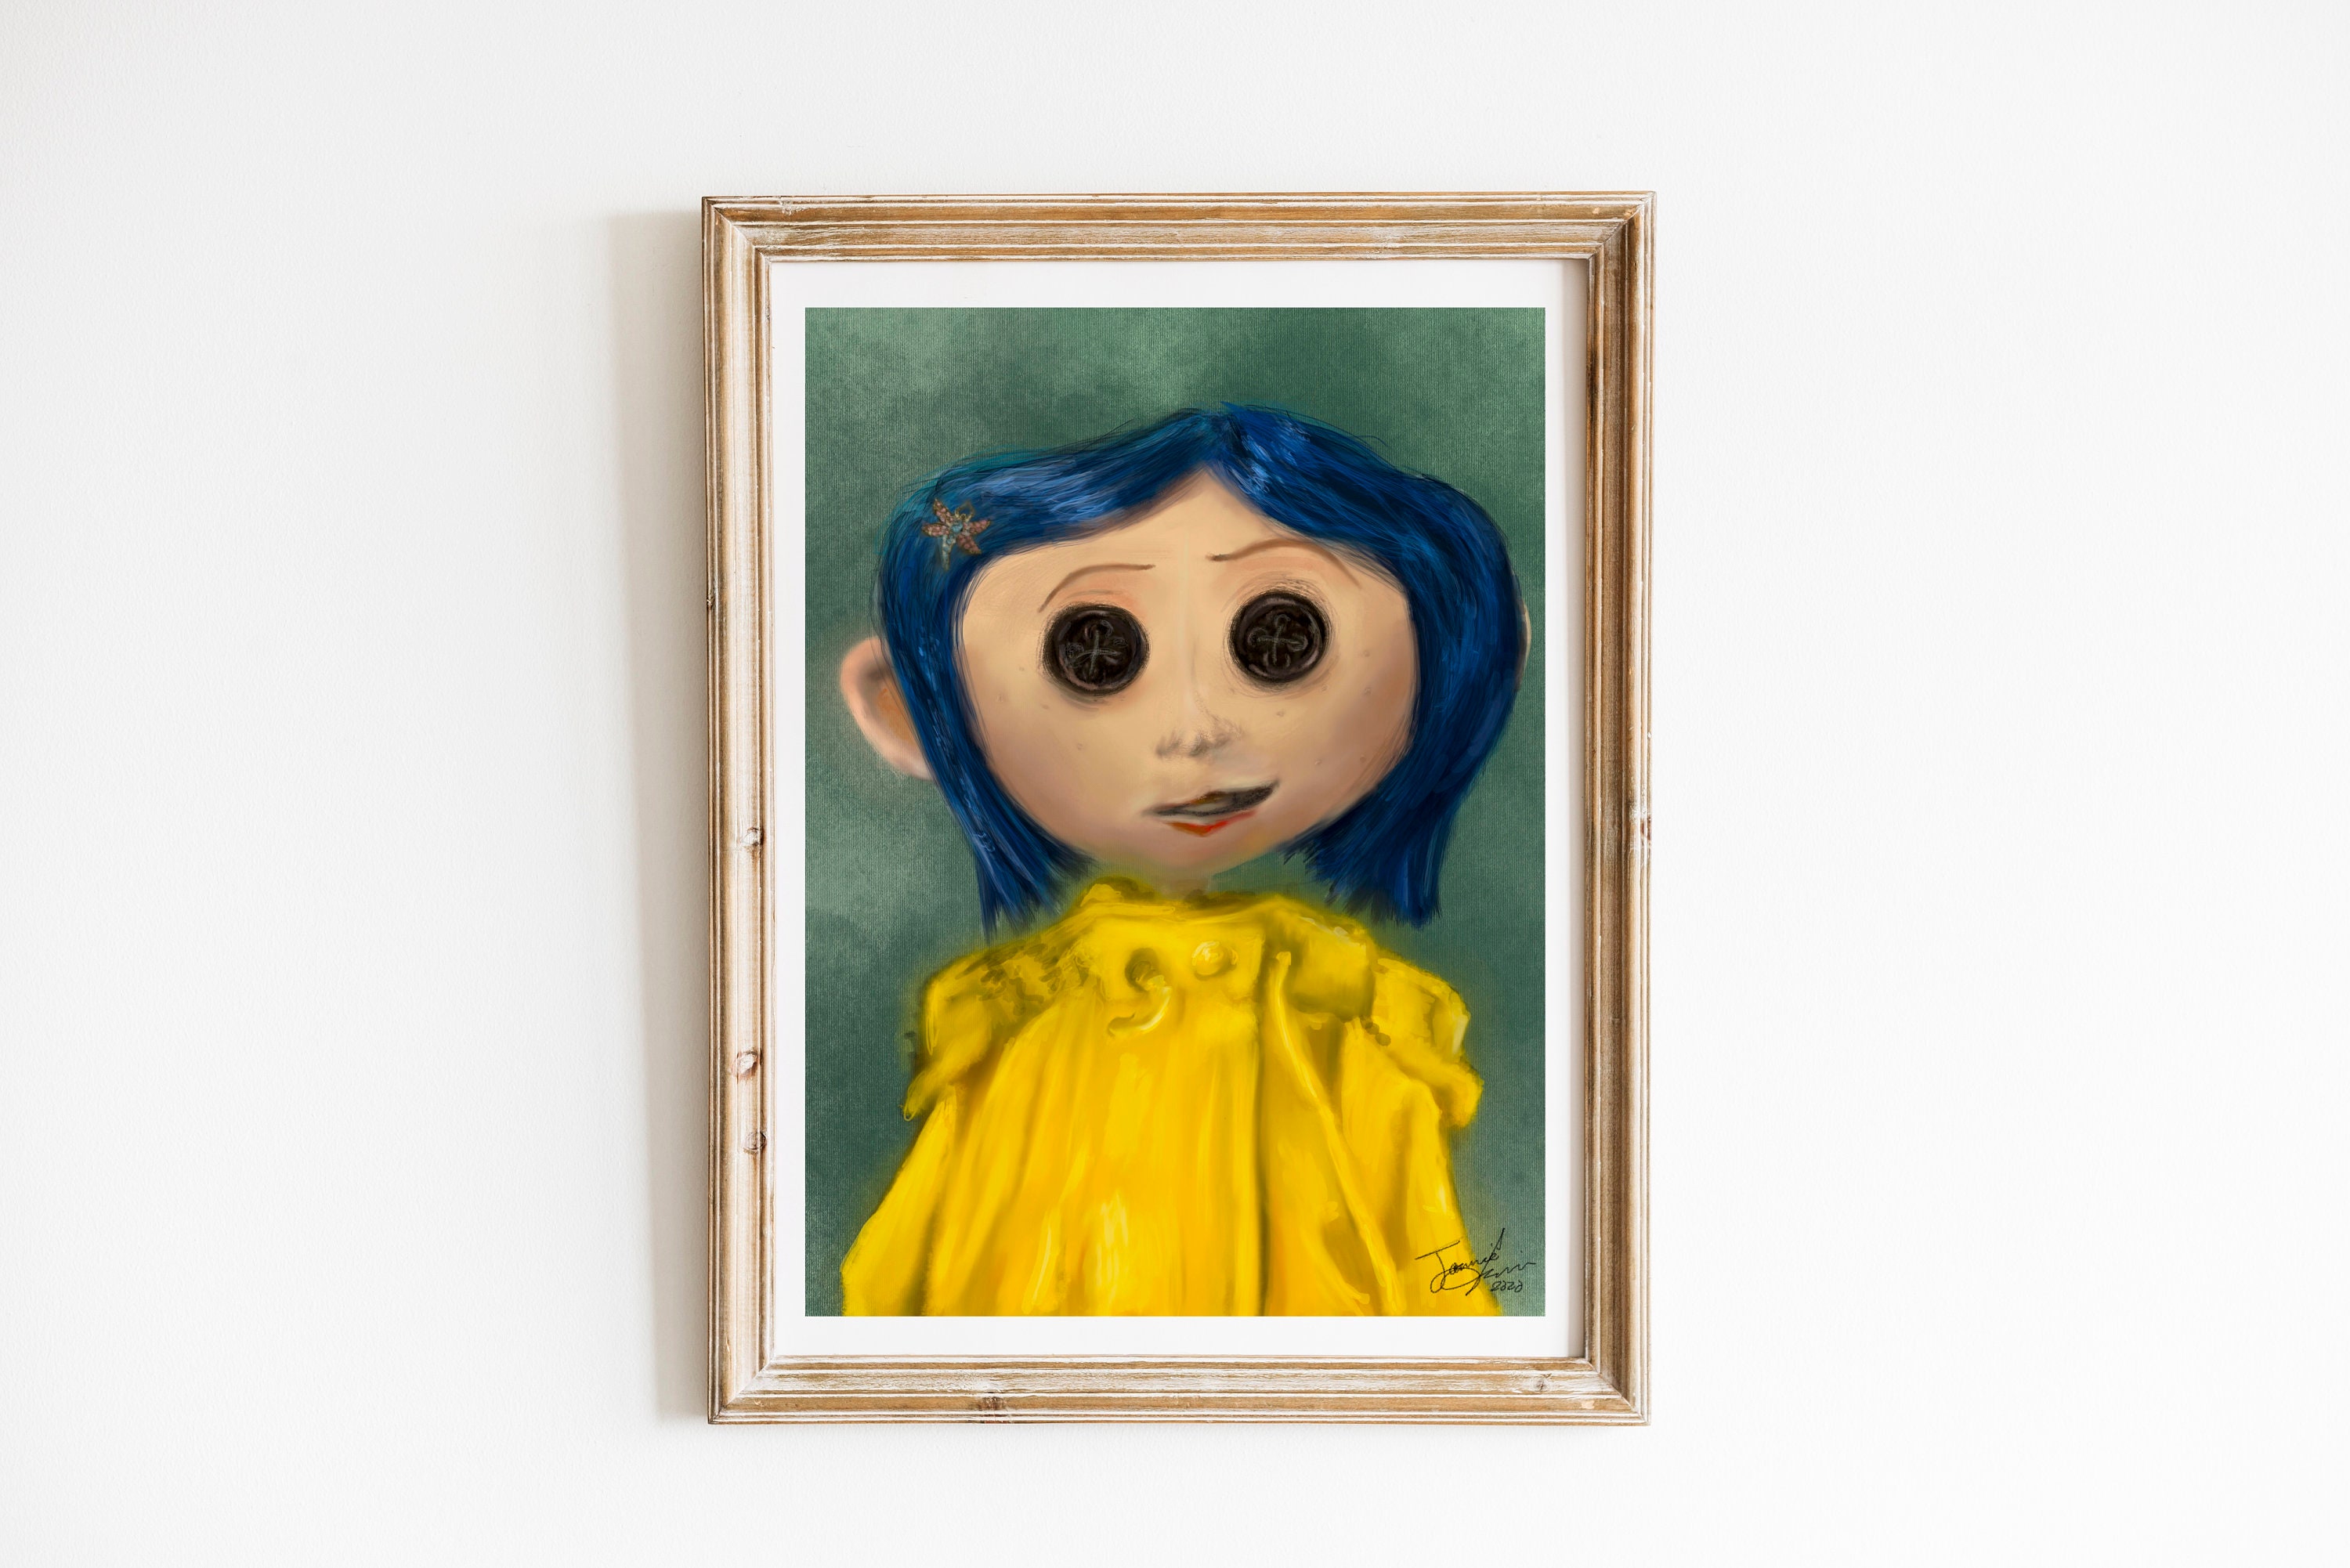 Set of 2 Button Eyes Coraline Dolls - Customized Crochet Creations Gallery  - Victoria's Art Den